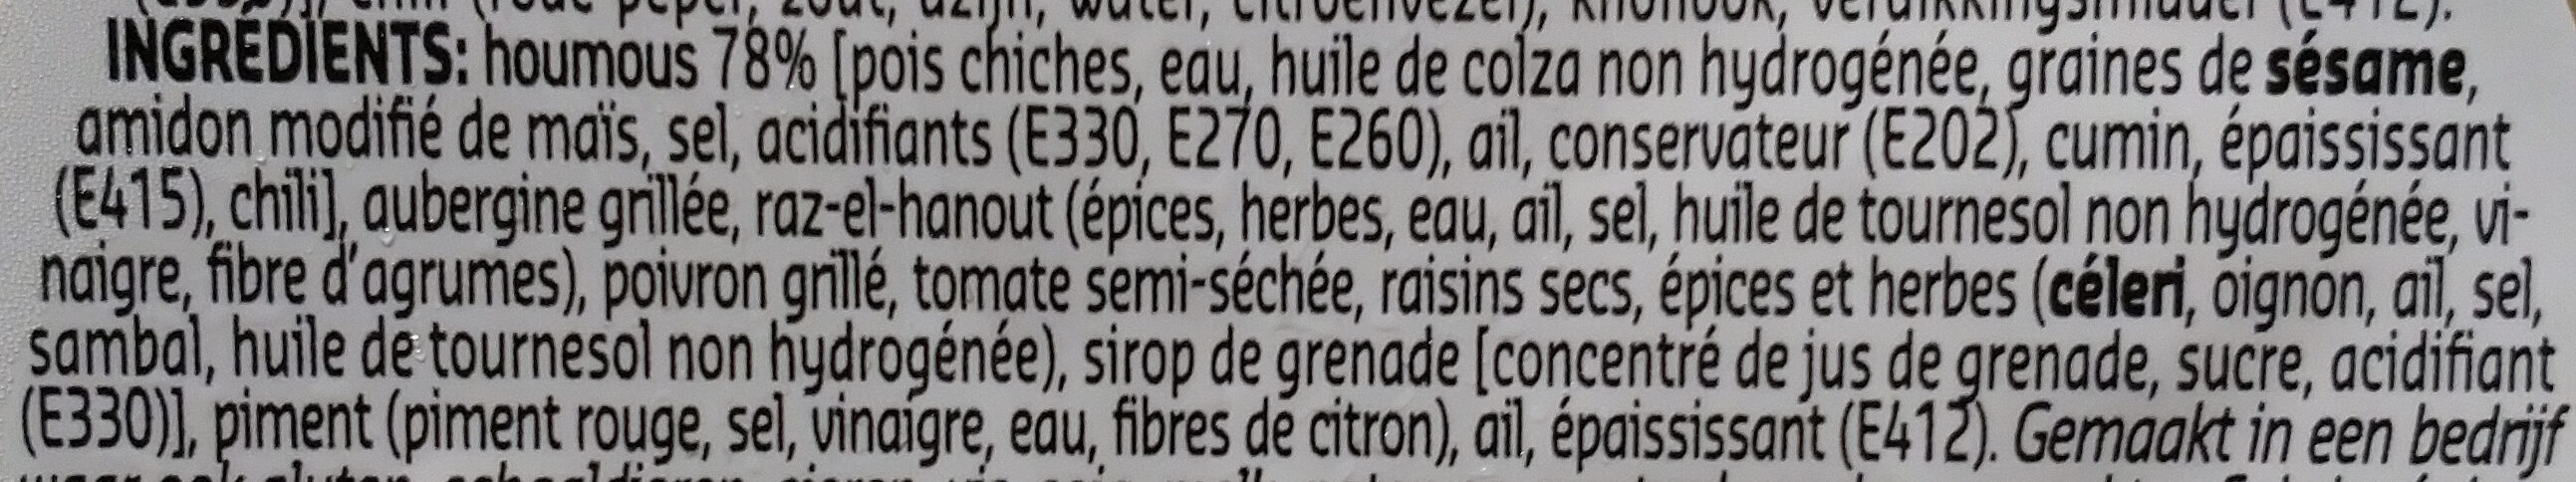 Hummus méditerranéen - Ingredients - fr